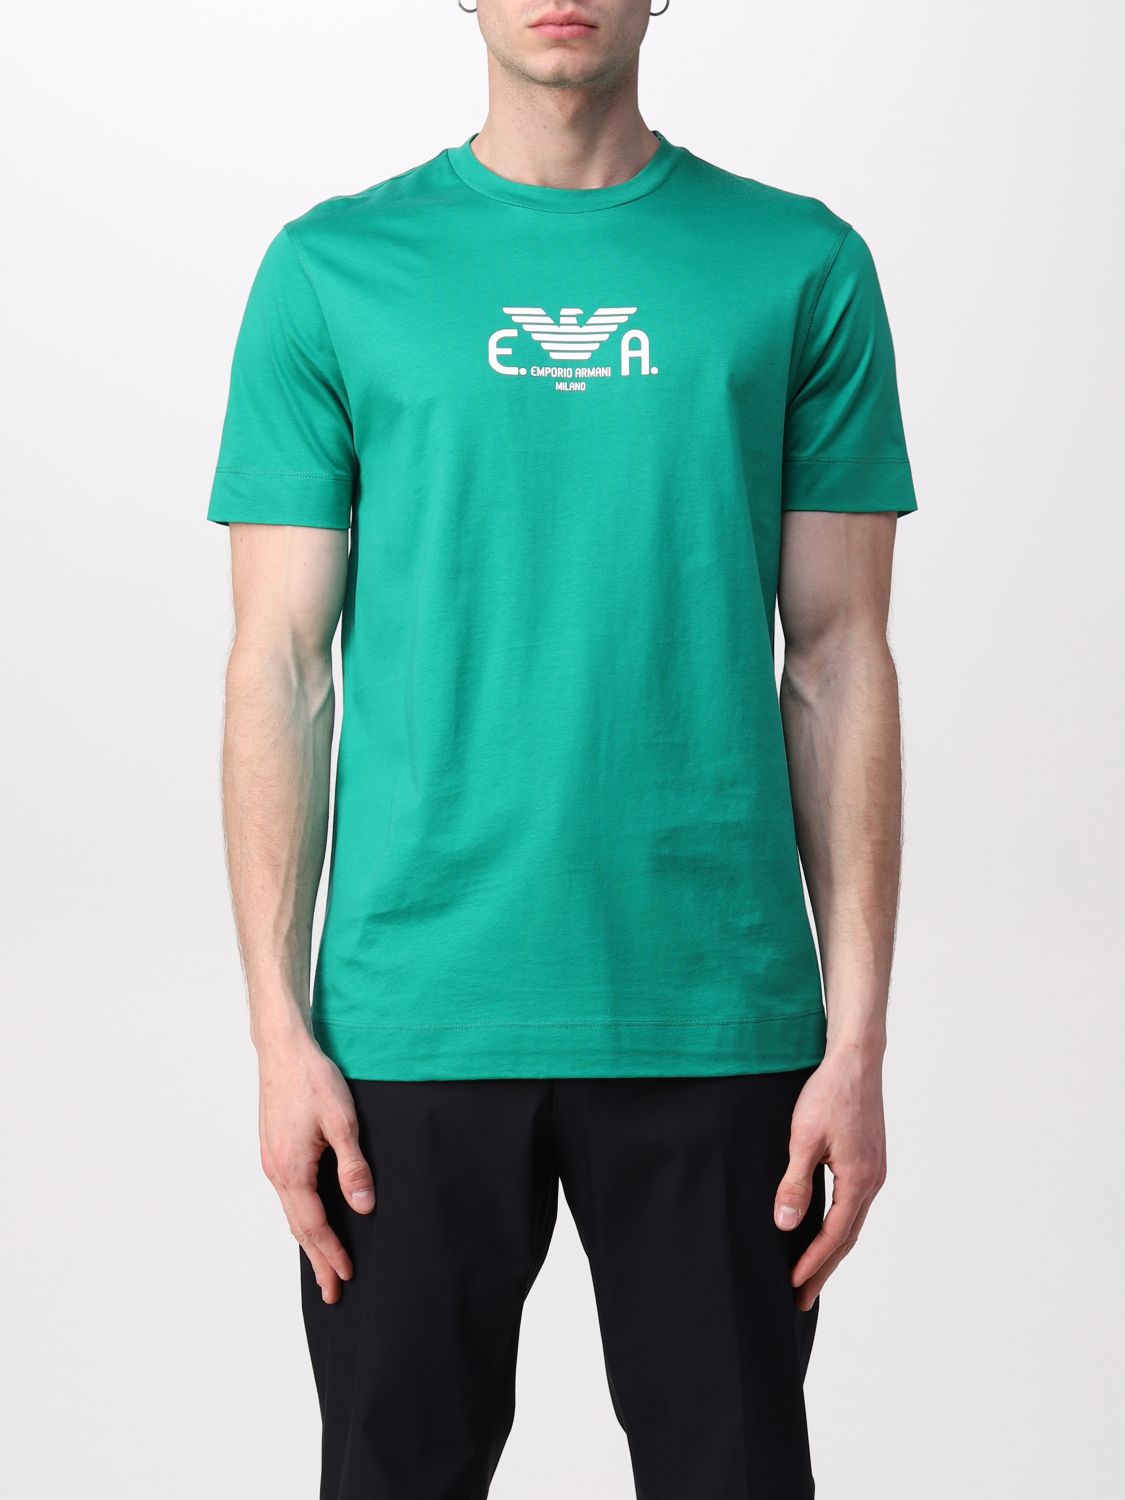 GIORGIO ARMANI, Military green Men's T-shirt